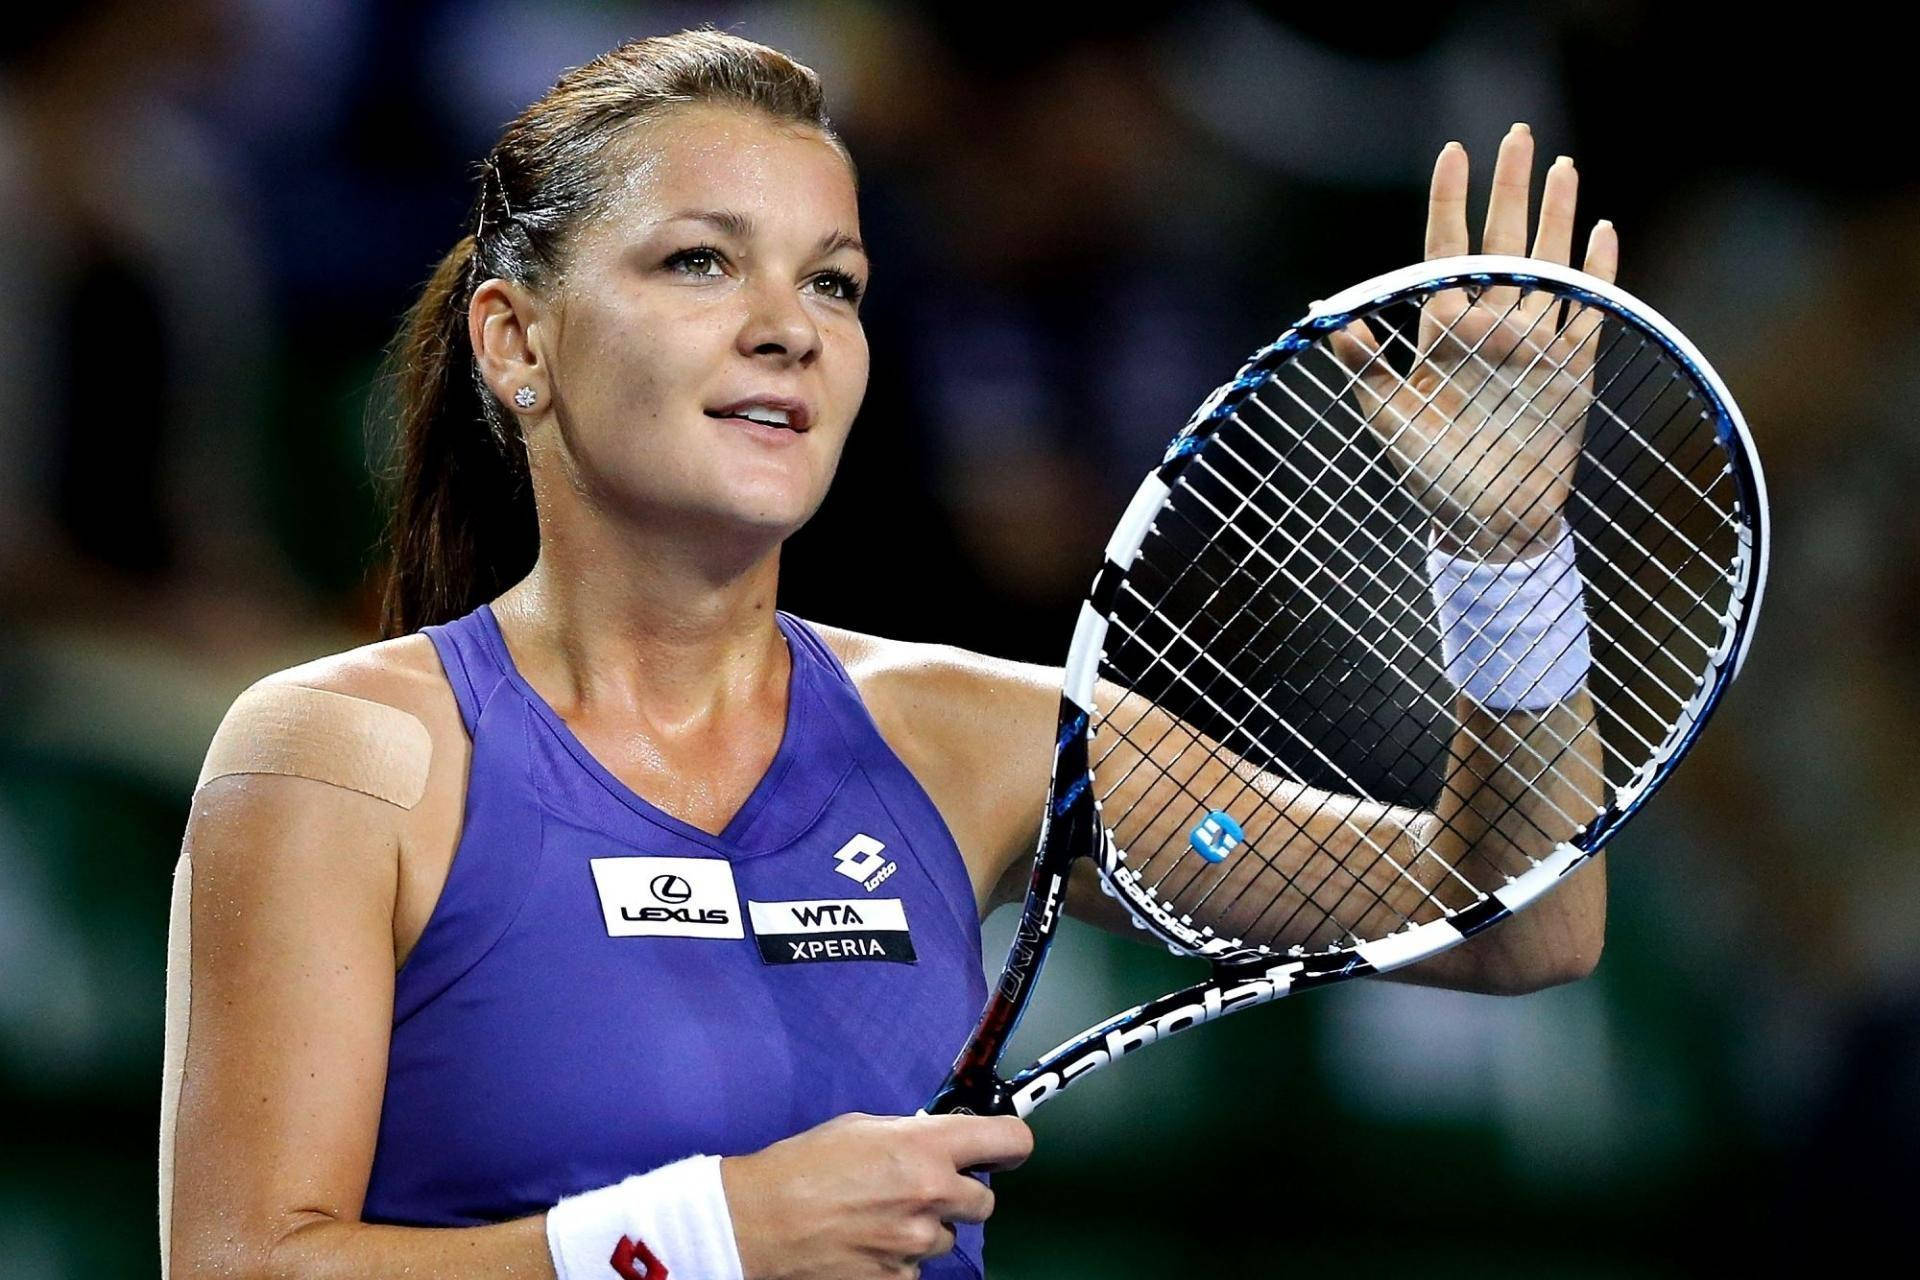 Agnieszka Radwanska in action with her racket during a tennis match. Wallpaper